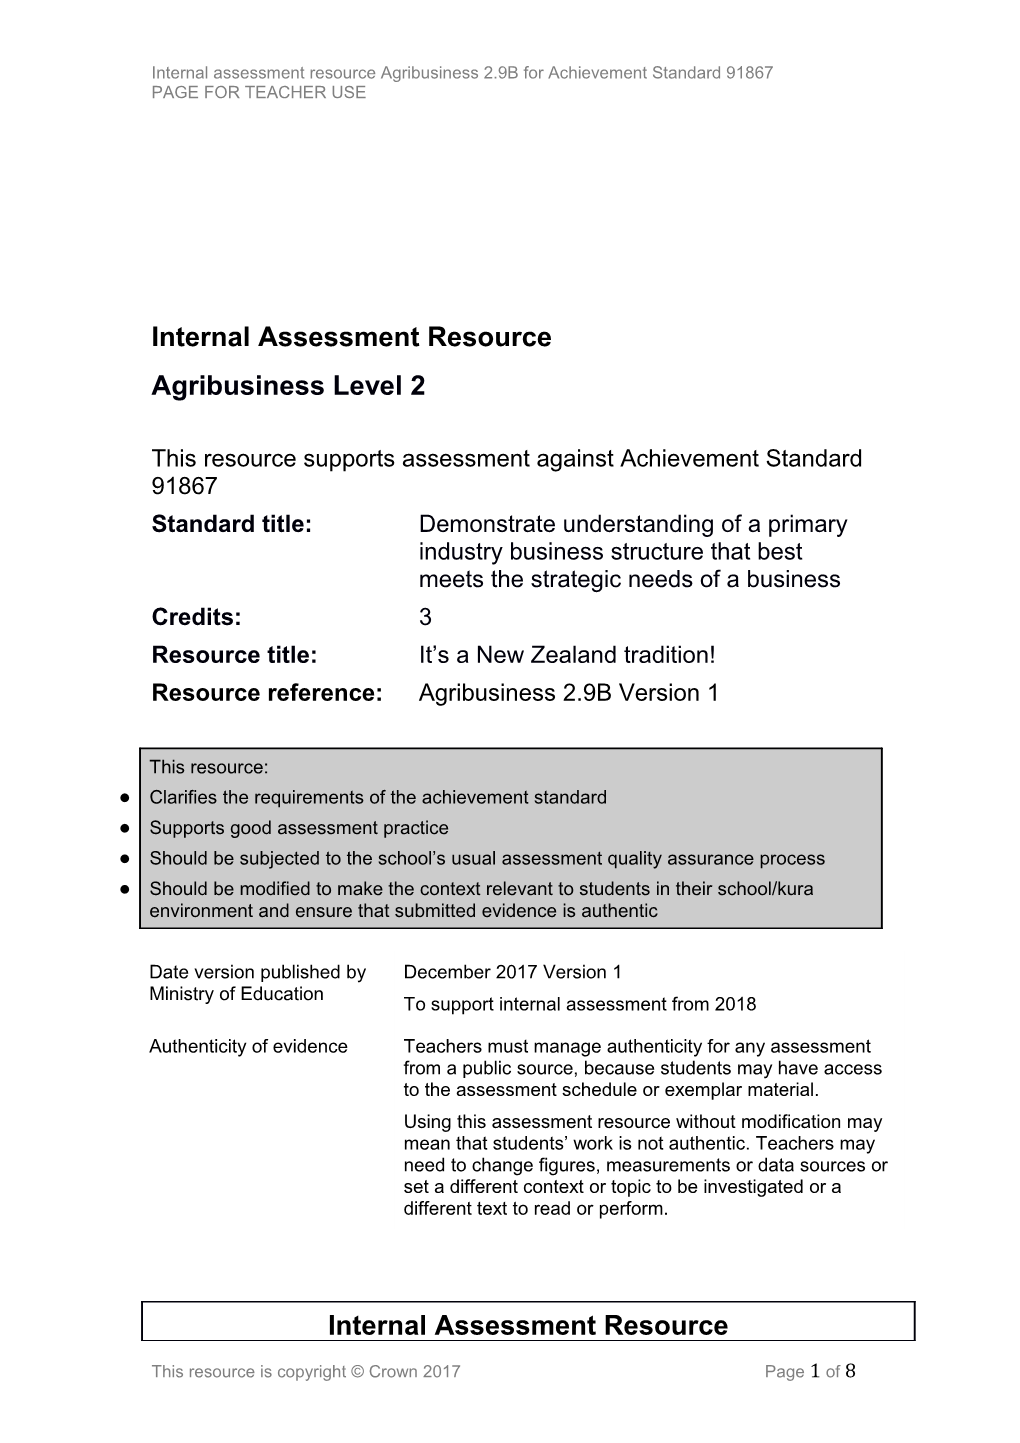 Internal Assessment Resource Agribusiness Level 2